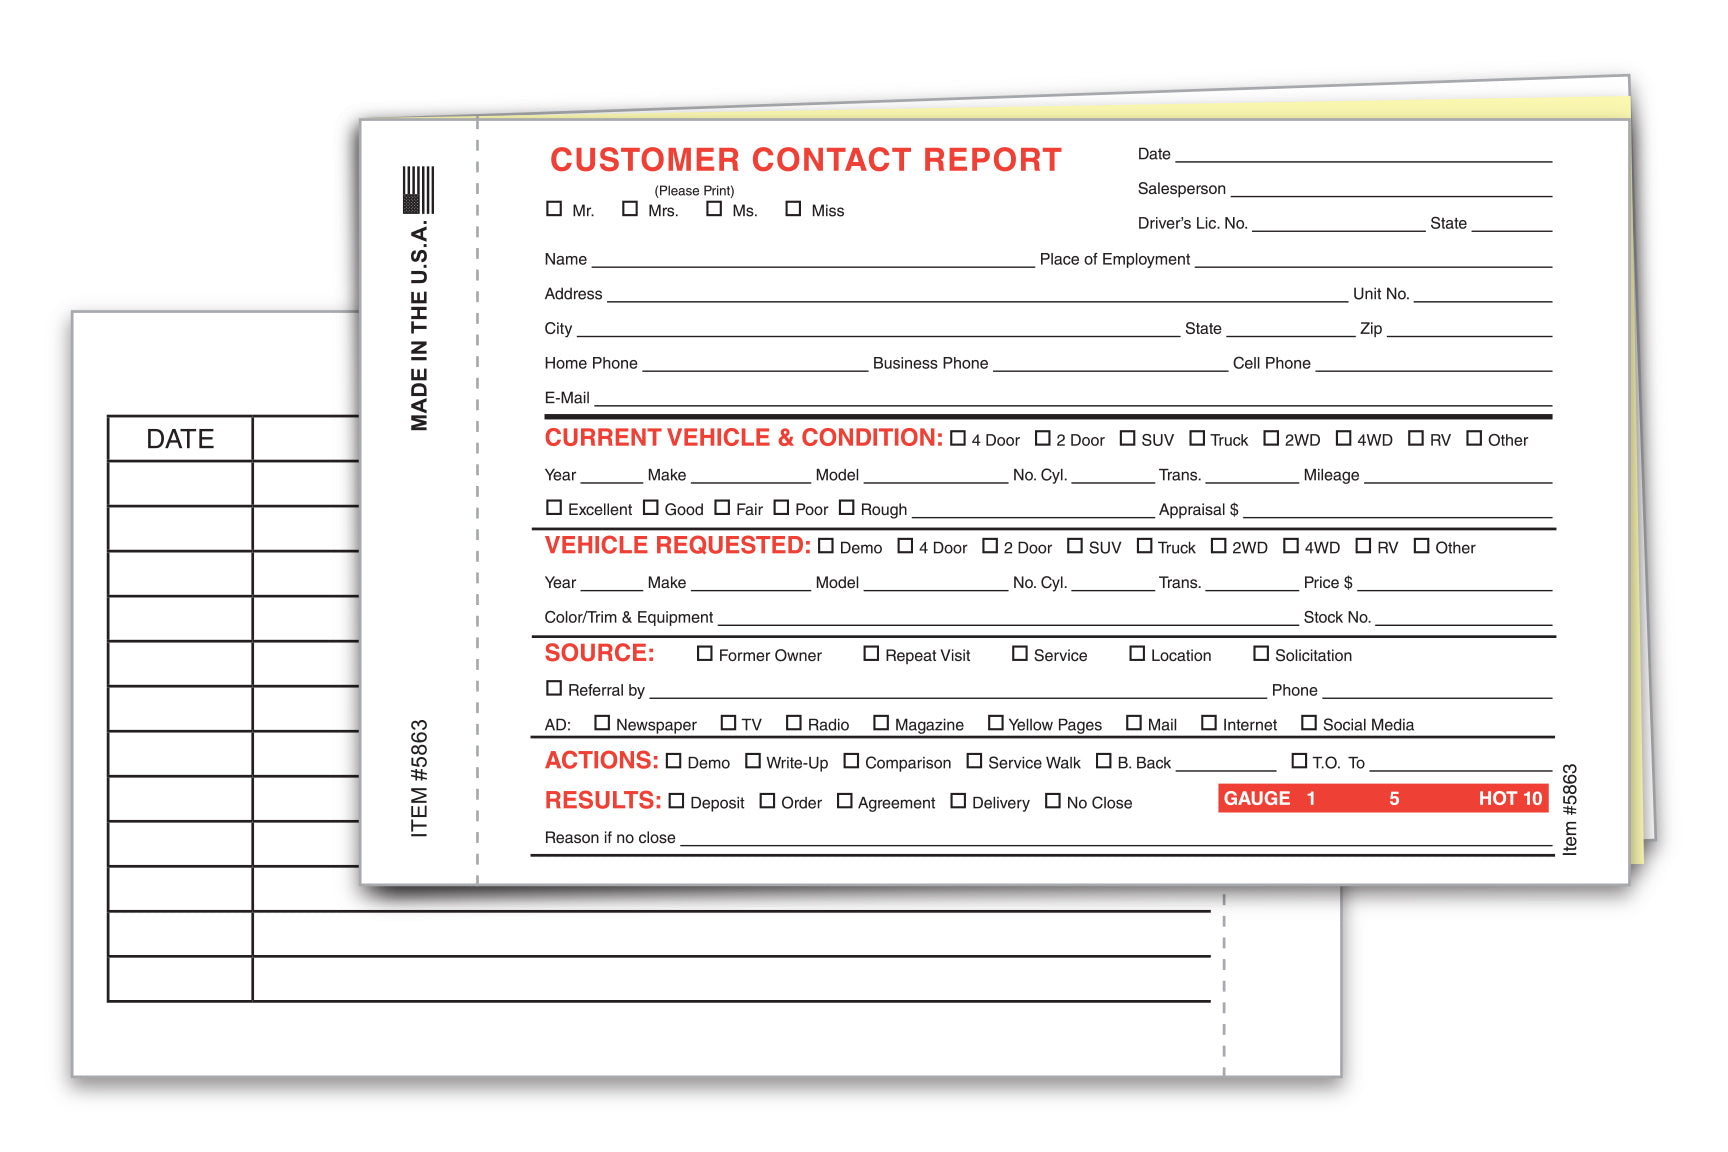 Customer Contact Report www.flywheelnw.com